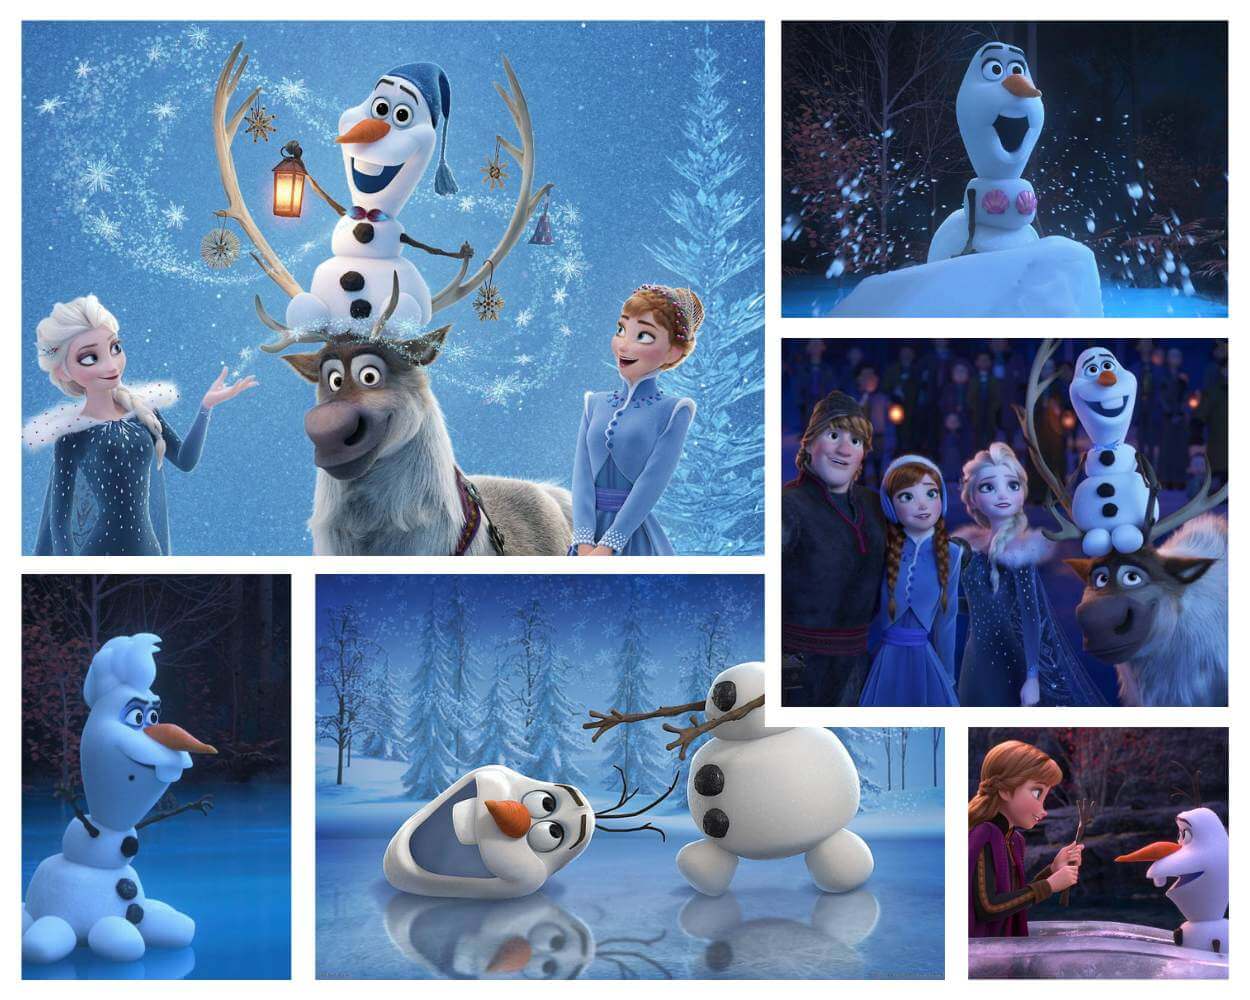 Olaf From Frozen An Unlikely Hero